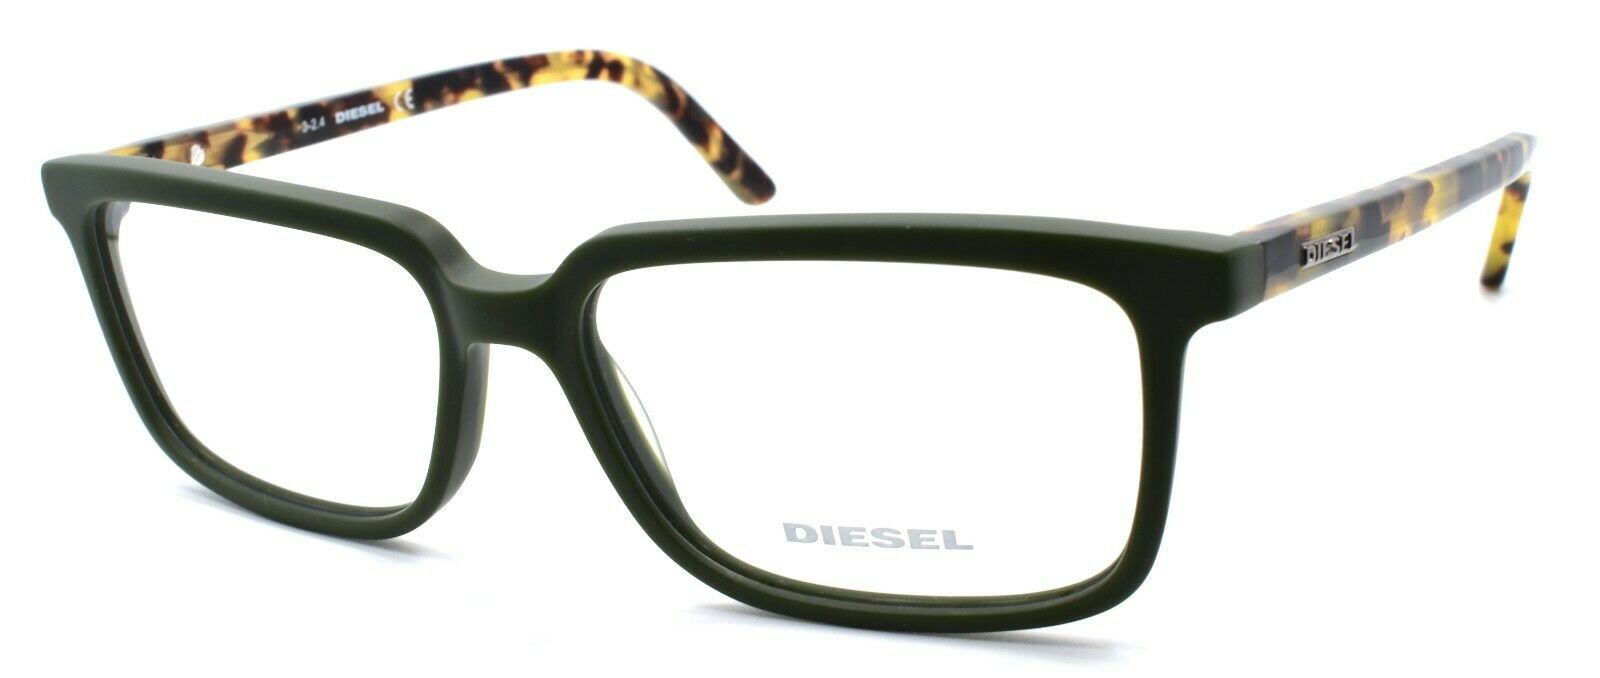 1-Diesel DL5067 098 Men's Eyeglasses Frames 54-15-145 Matte Green / Havana-664689602278-IKSpecs